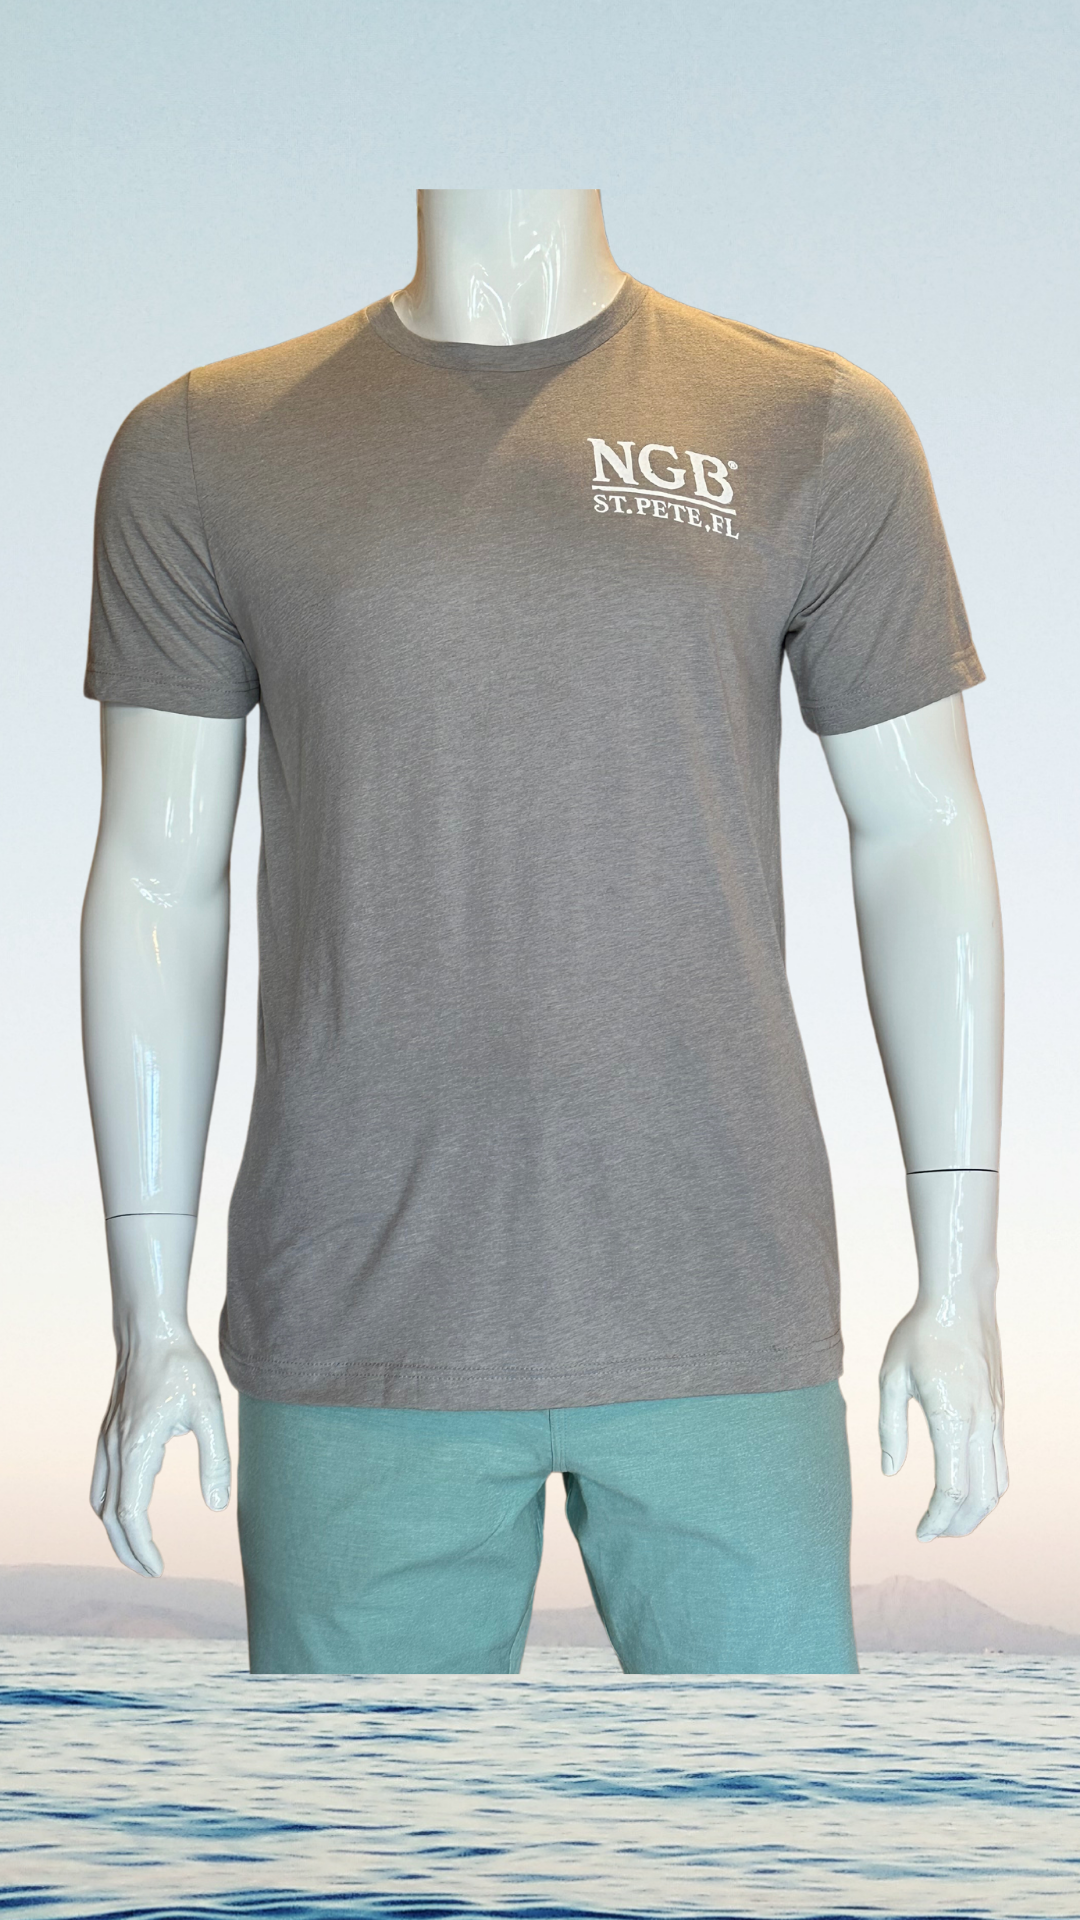 Short Sleeve T-Shirt - Light Grey - Black/White Kaia on FL Seal